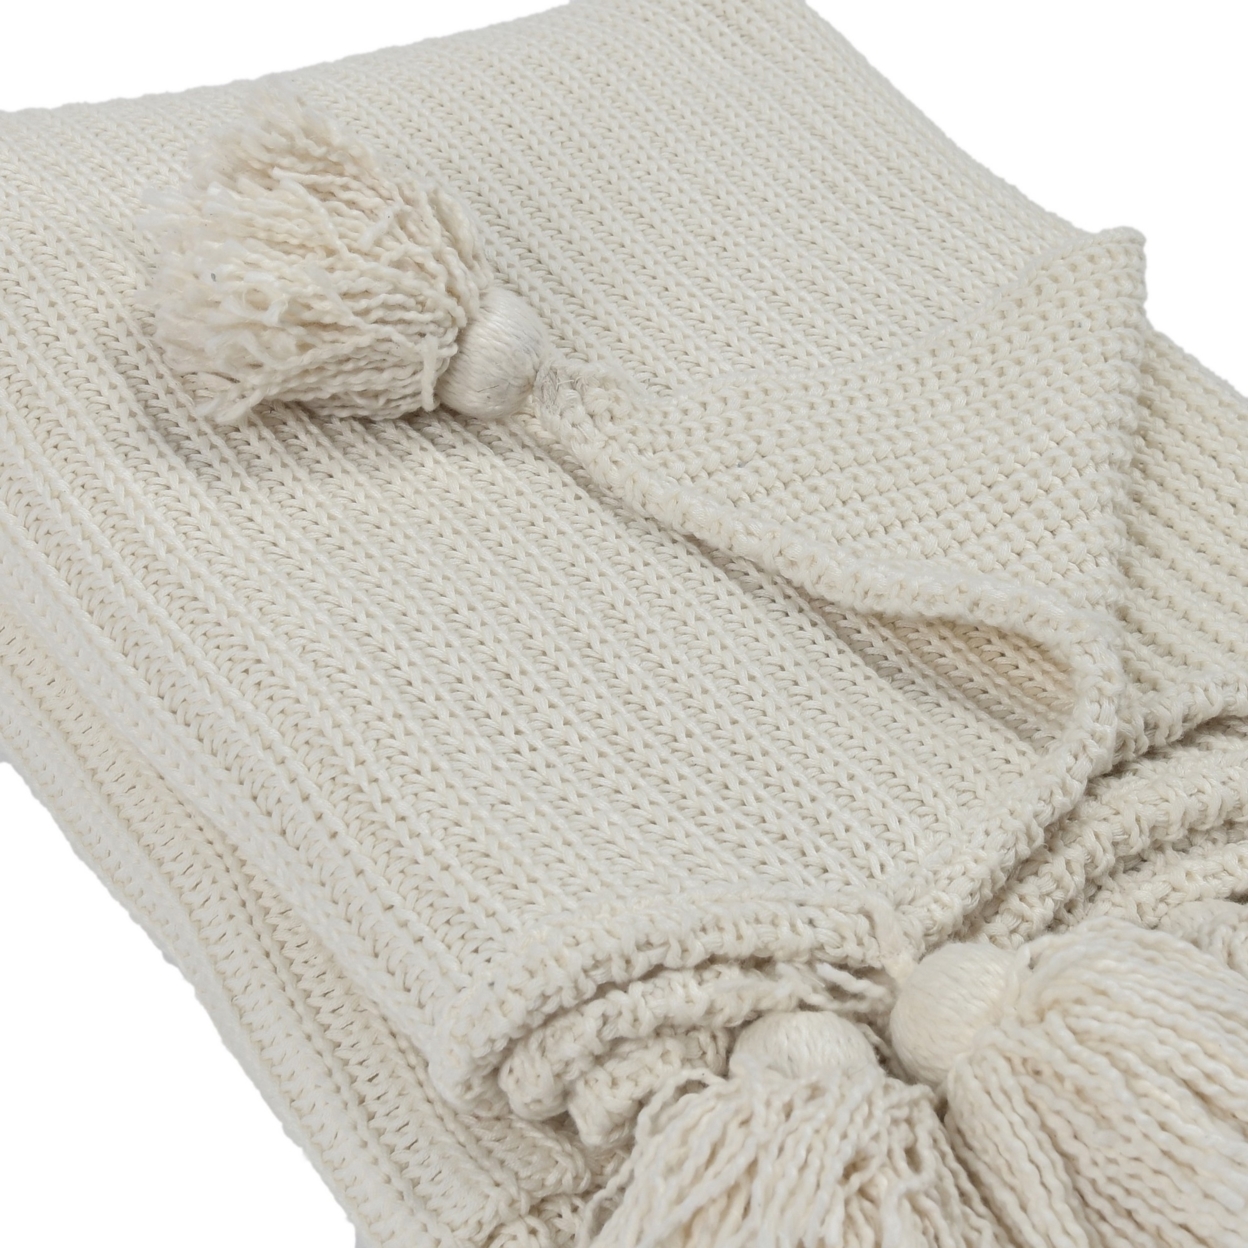 Dee 50 X 70 Soft Cotton Throw Blanket, Knitted Design, Woven Tassels, Ivory- Saltoro Sherpi